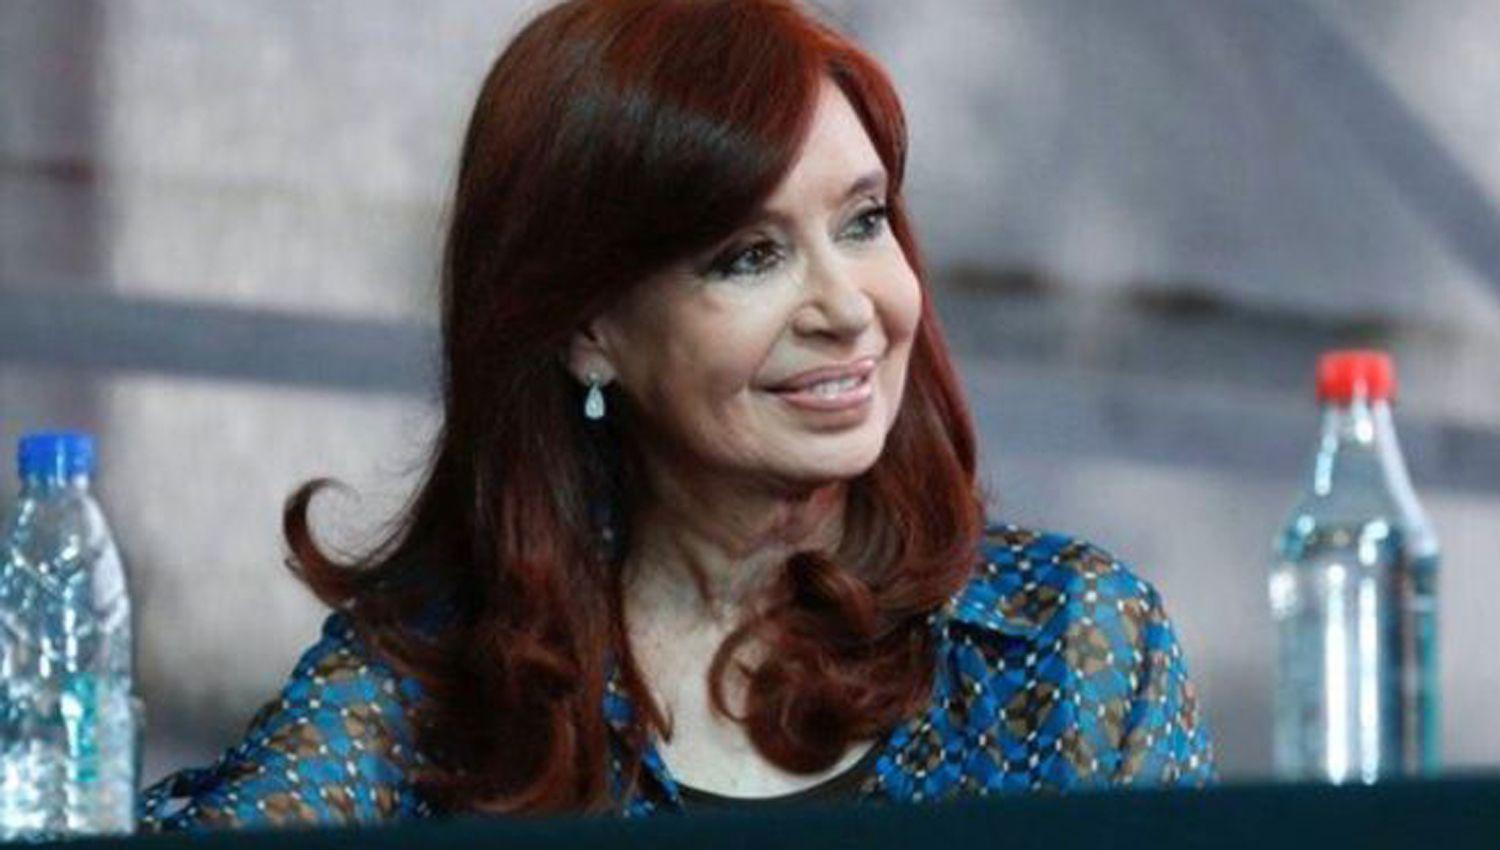 Rechazan reabrir la causa por supuesto enriquecimiento iliacutecito contra Cristina Kirchner